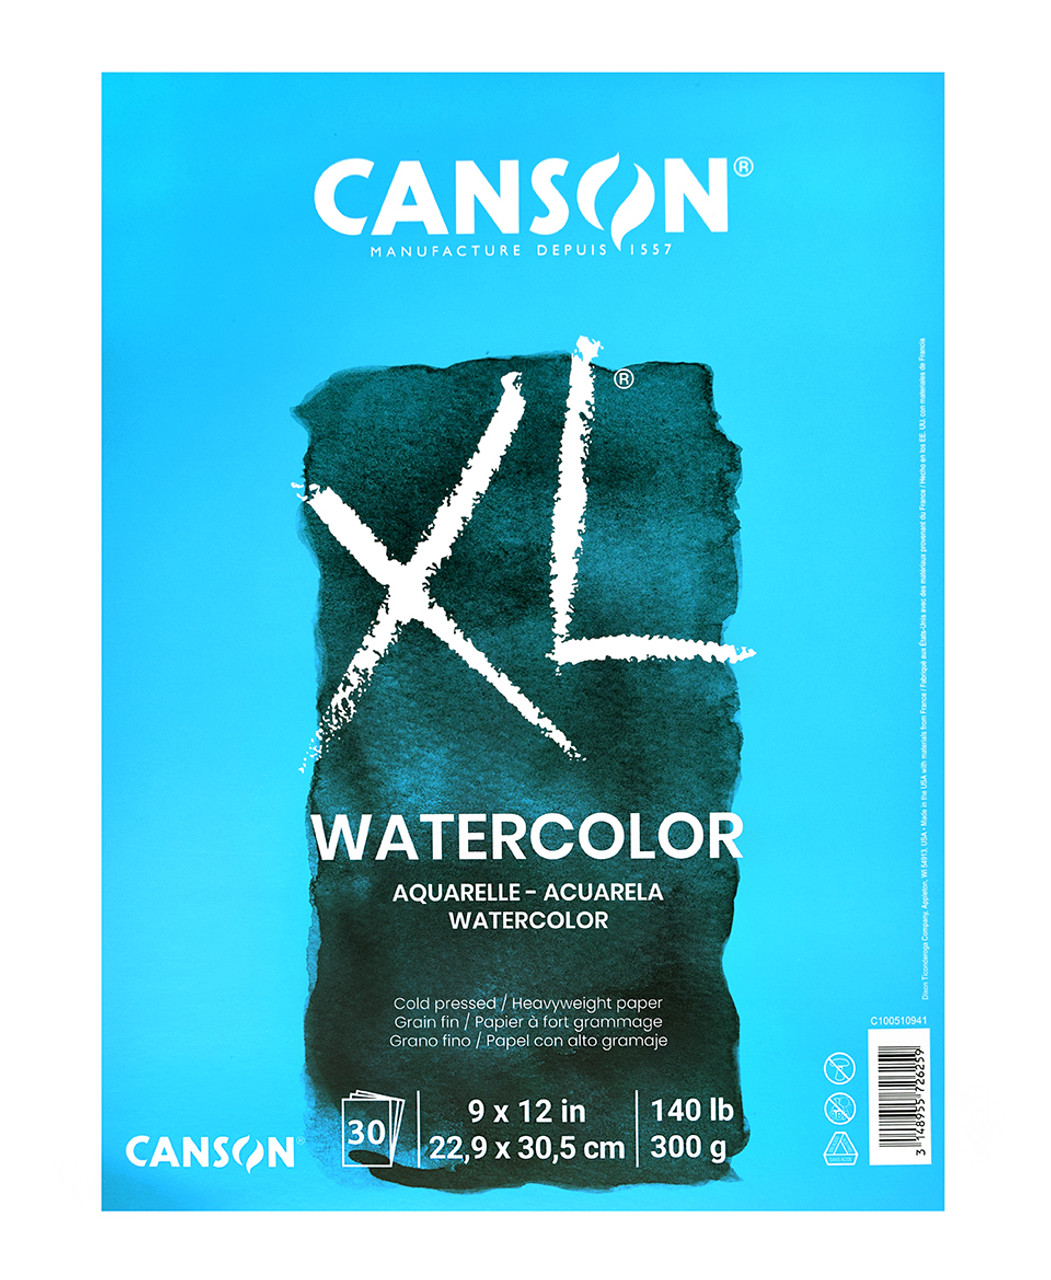 Canson XL Series Rough Mix Media, 9 x 12 : : Home